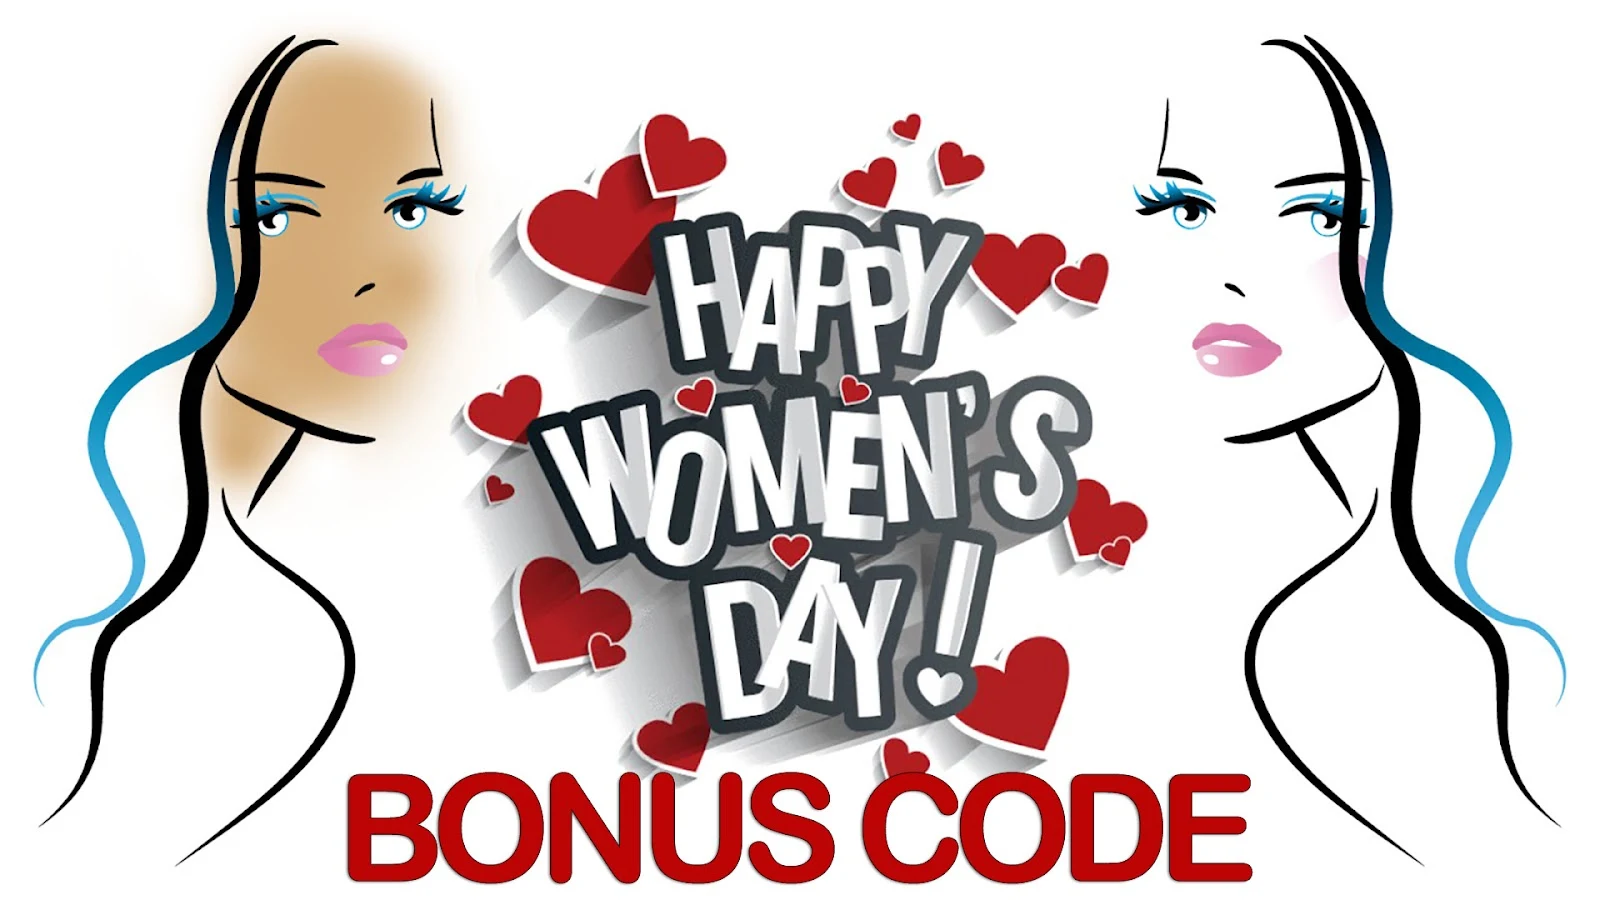 Image of international Womens day bonus code banner